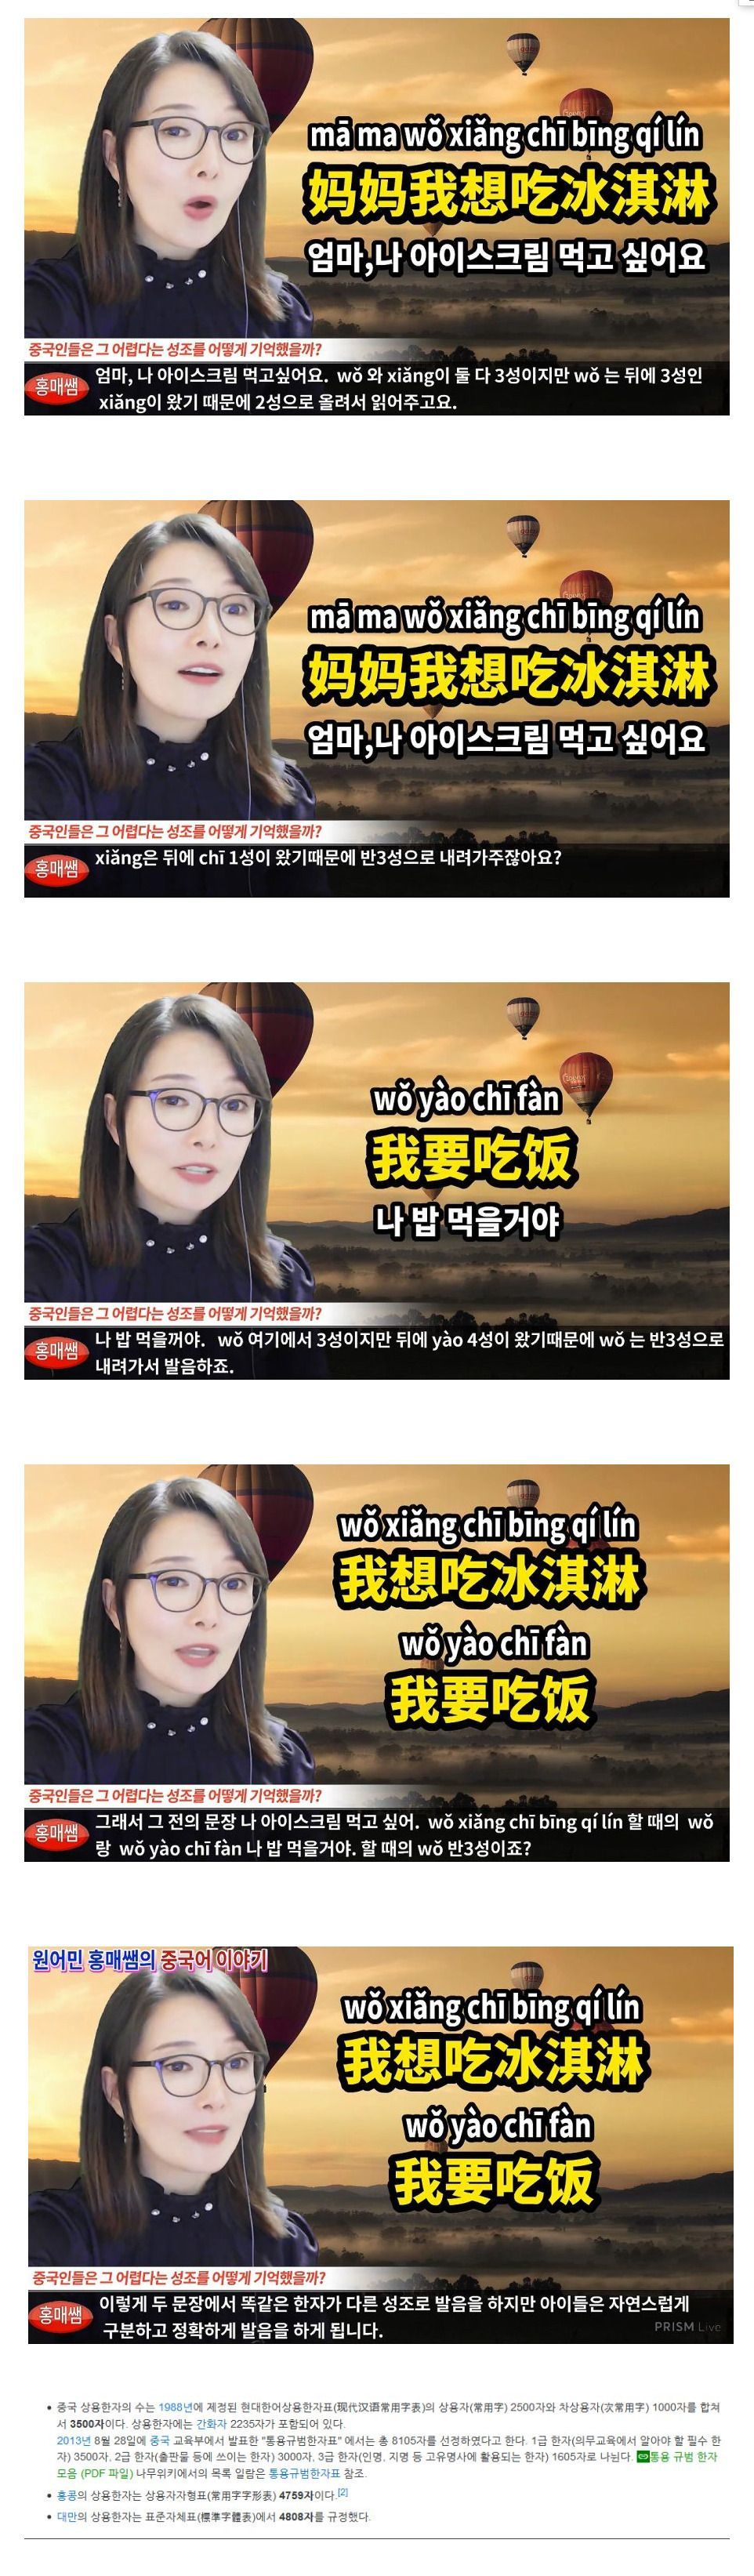 Screenshot_2020-01-17 한국인에게 중국어가 어려운 이유 유머 게시판.jpg